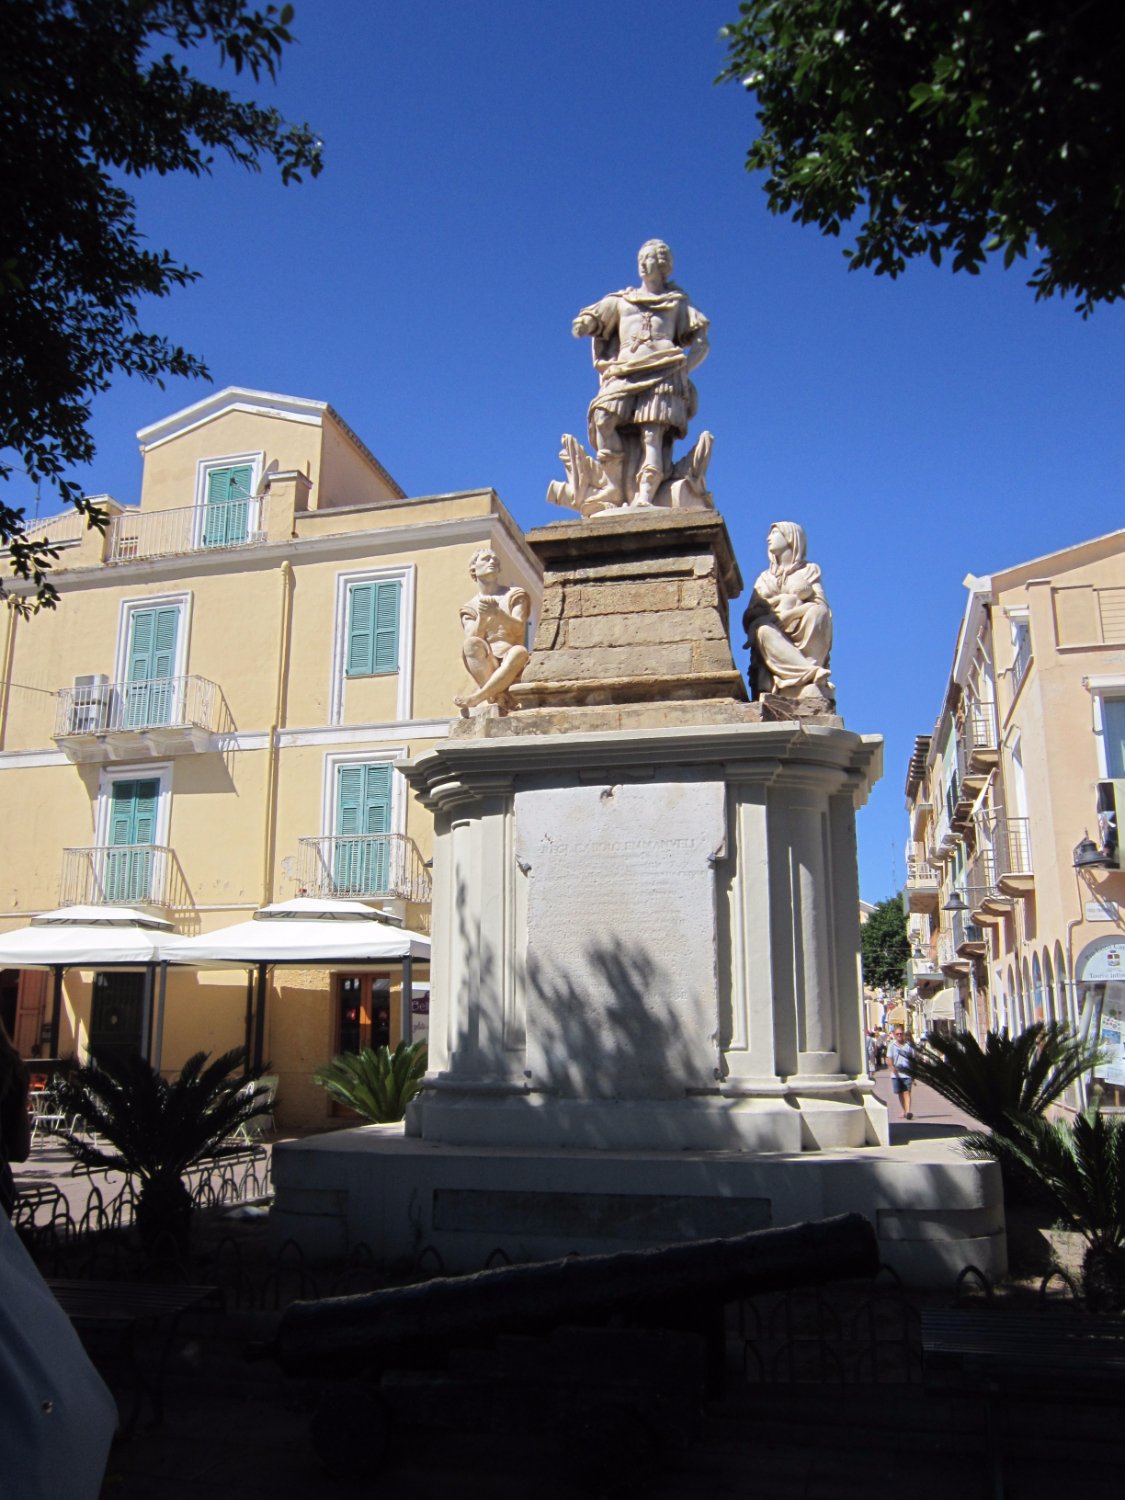 Monumento a Carlo Emanuele III